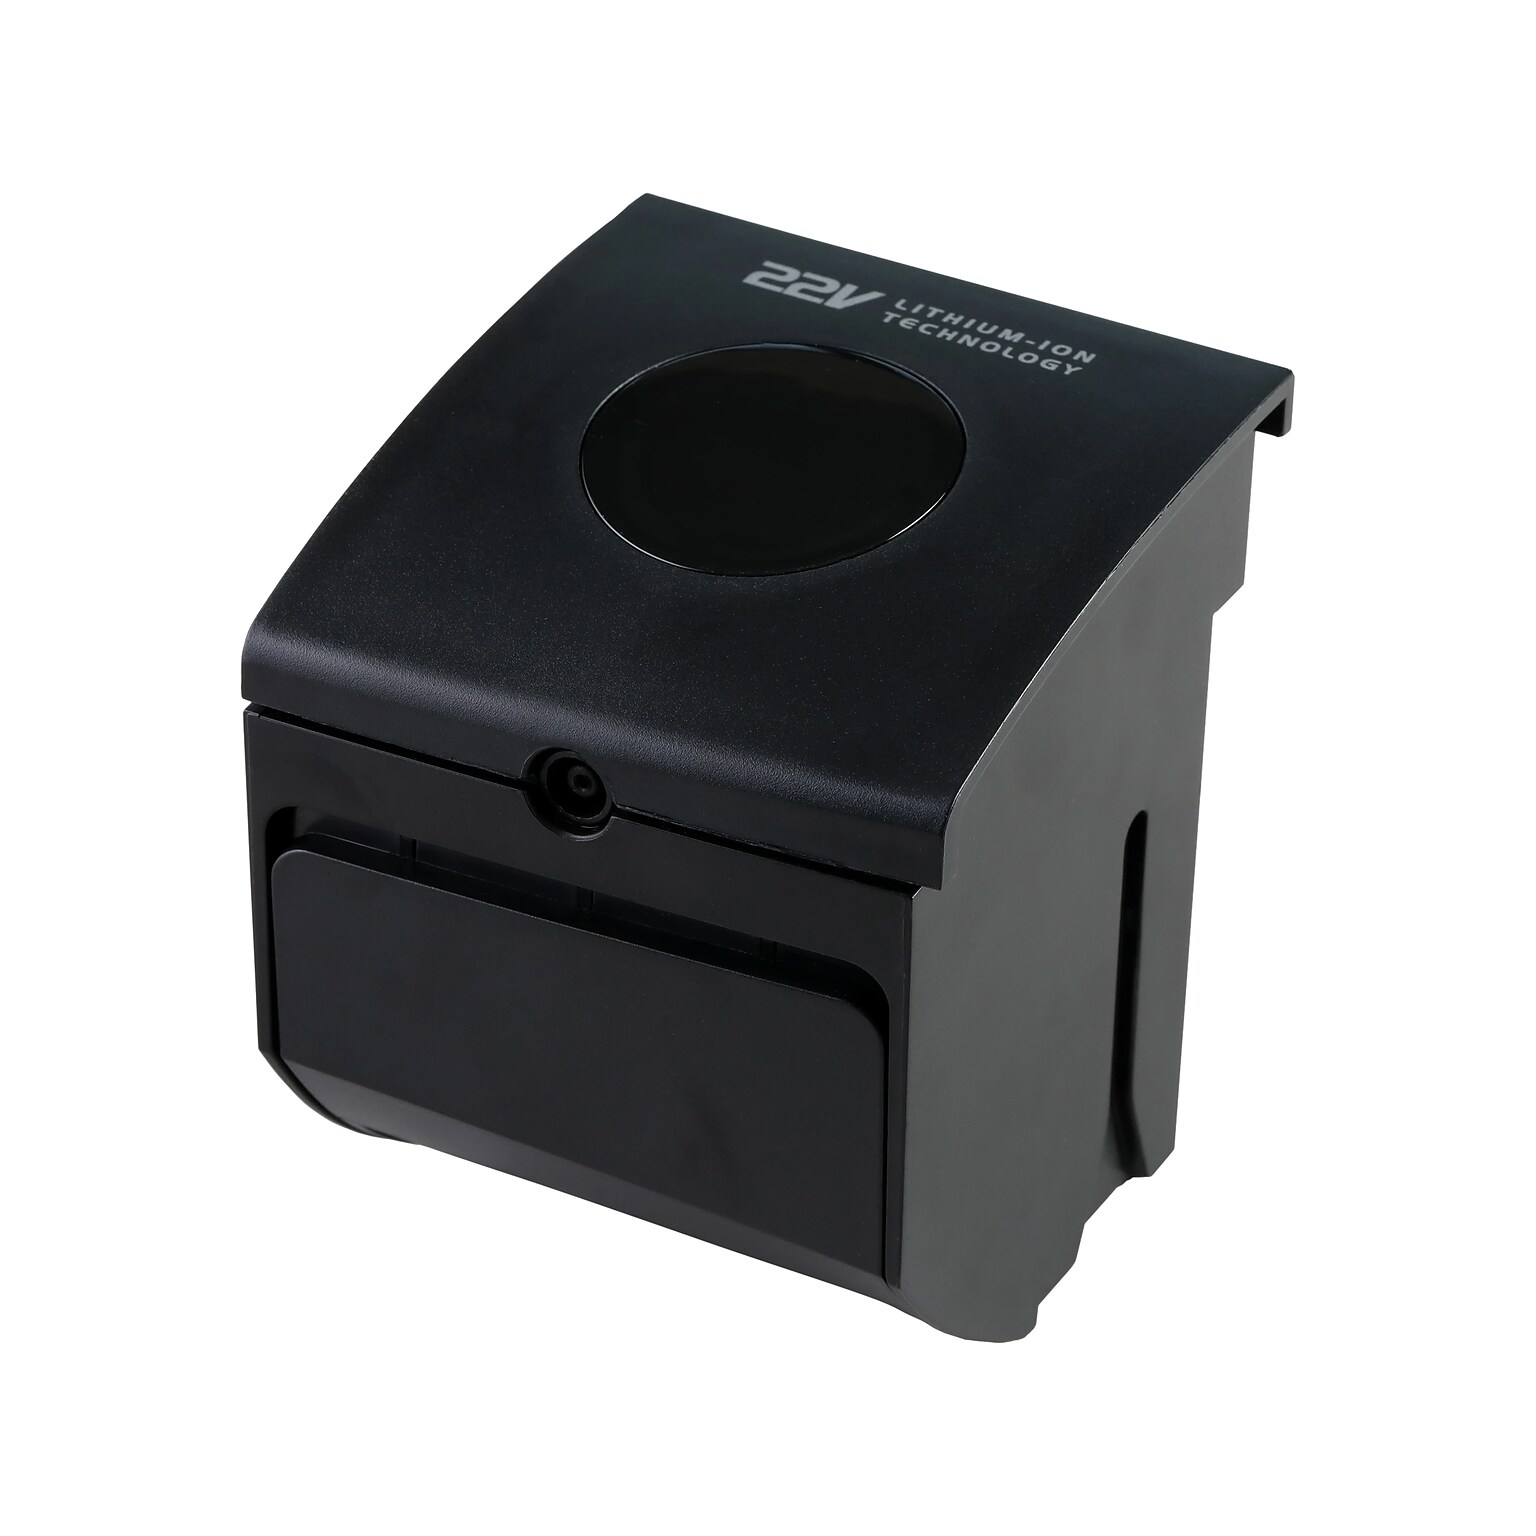 Sanitaire Li-on Battery for TRACER Cordless Vacuum SC7100, Black (3006)